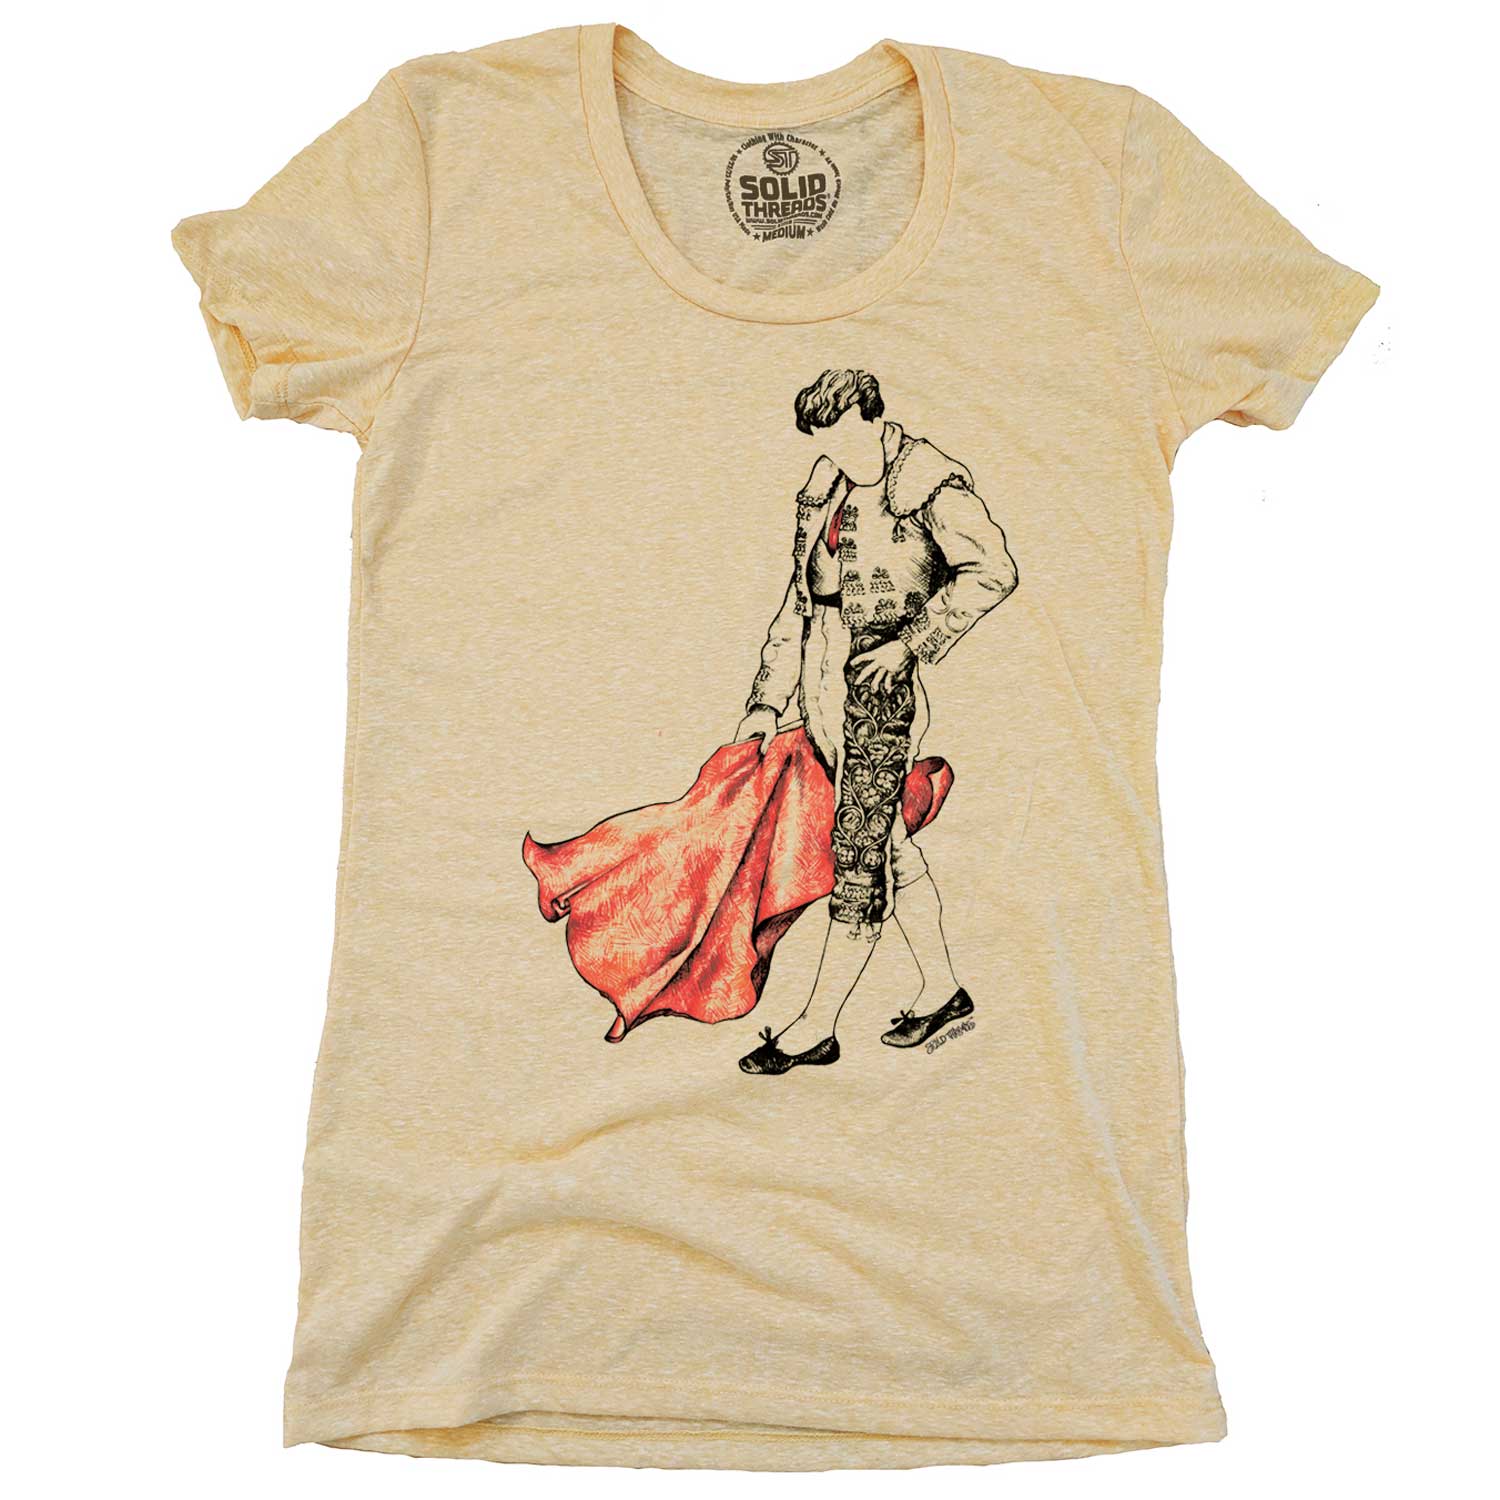 Women's Matador Cool Torero Graphic T-Shirt | Vintage Bull Fighter Tee | Solid Threads